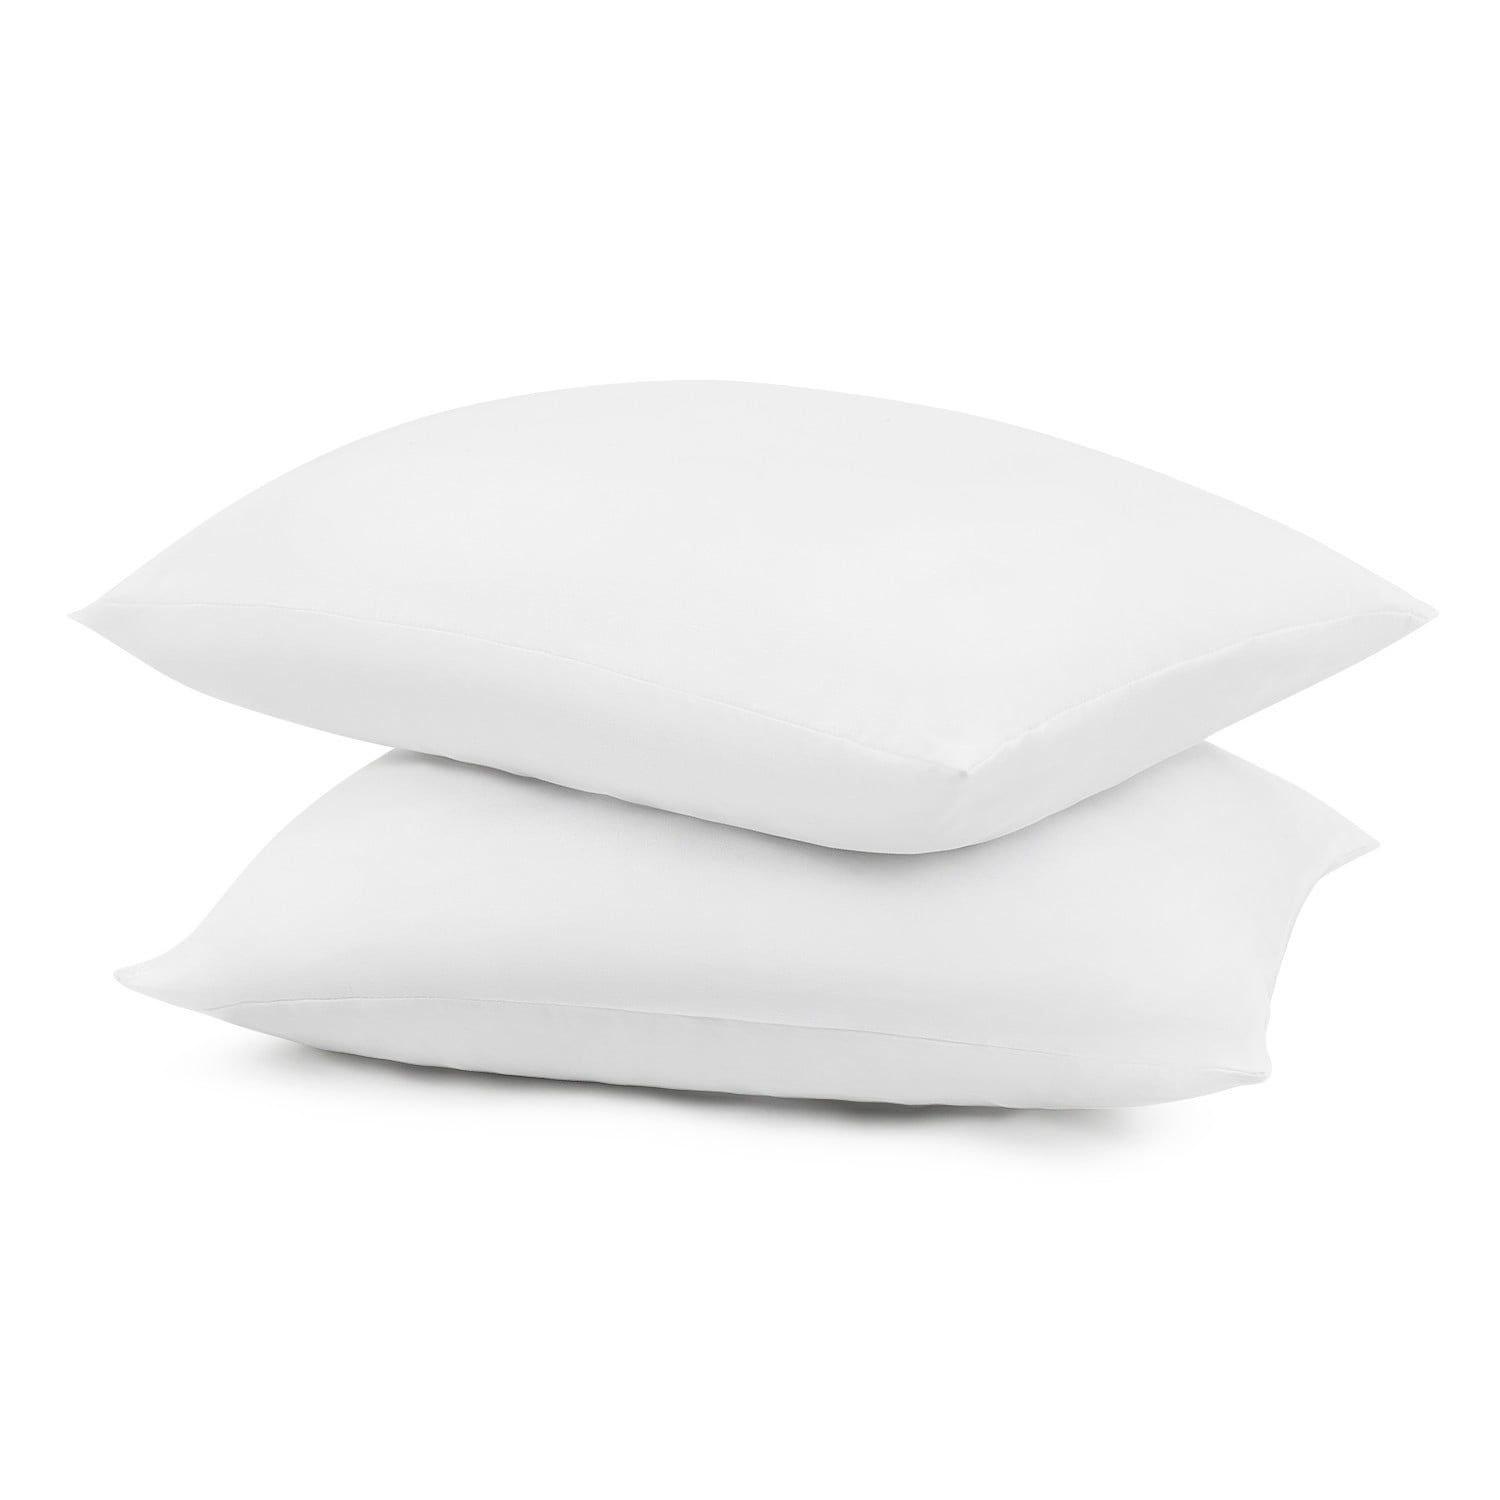 Ram Home (TM) Pillow Insert White - 18x18 Inch. Polyester Made - Machi –  moonrest